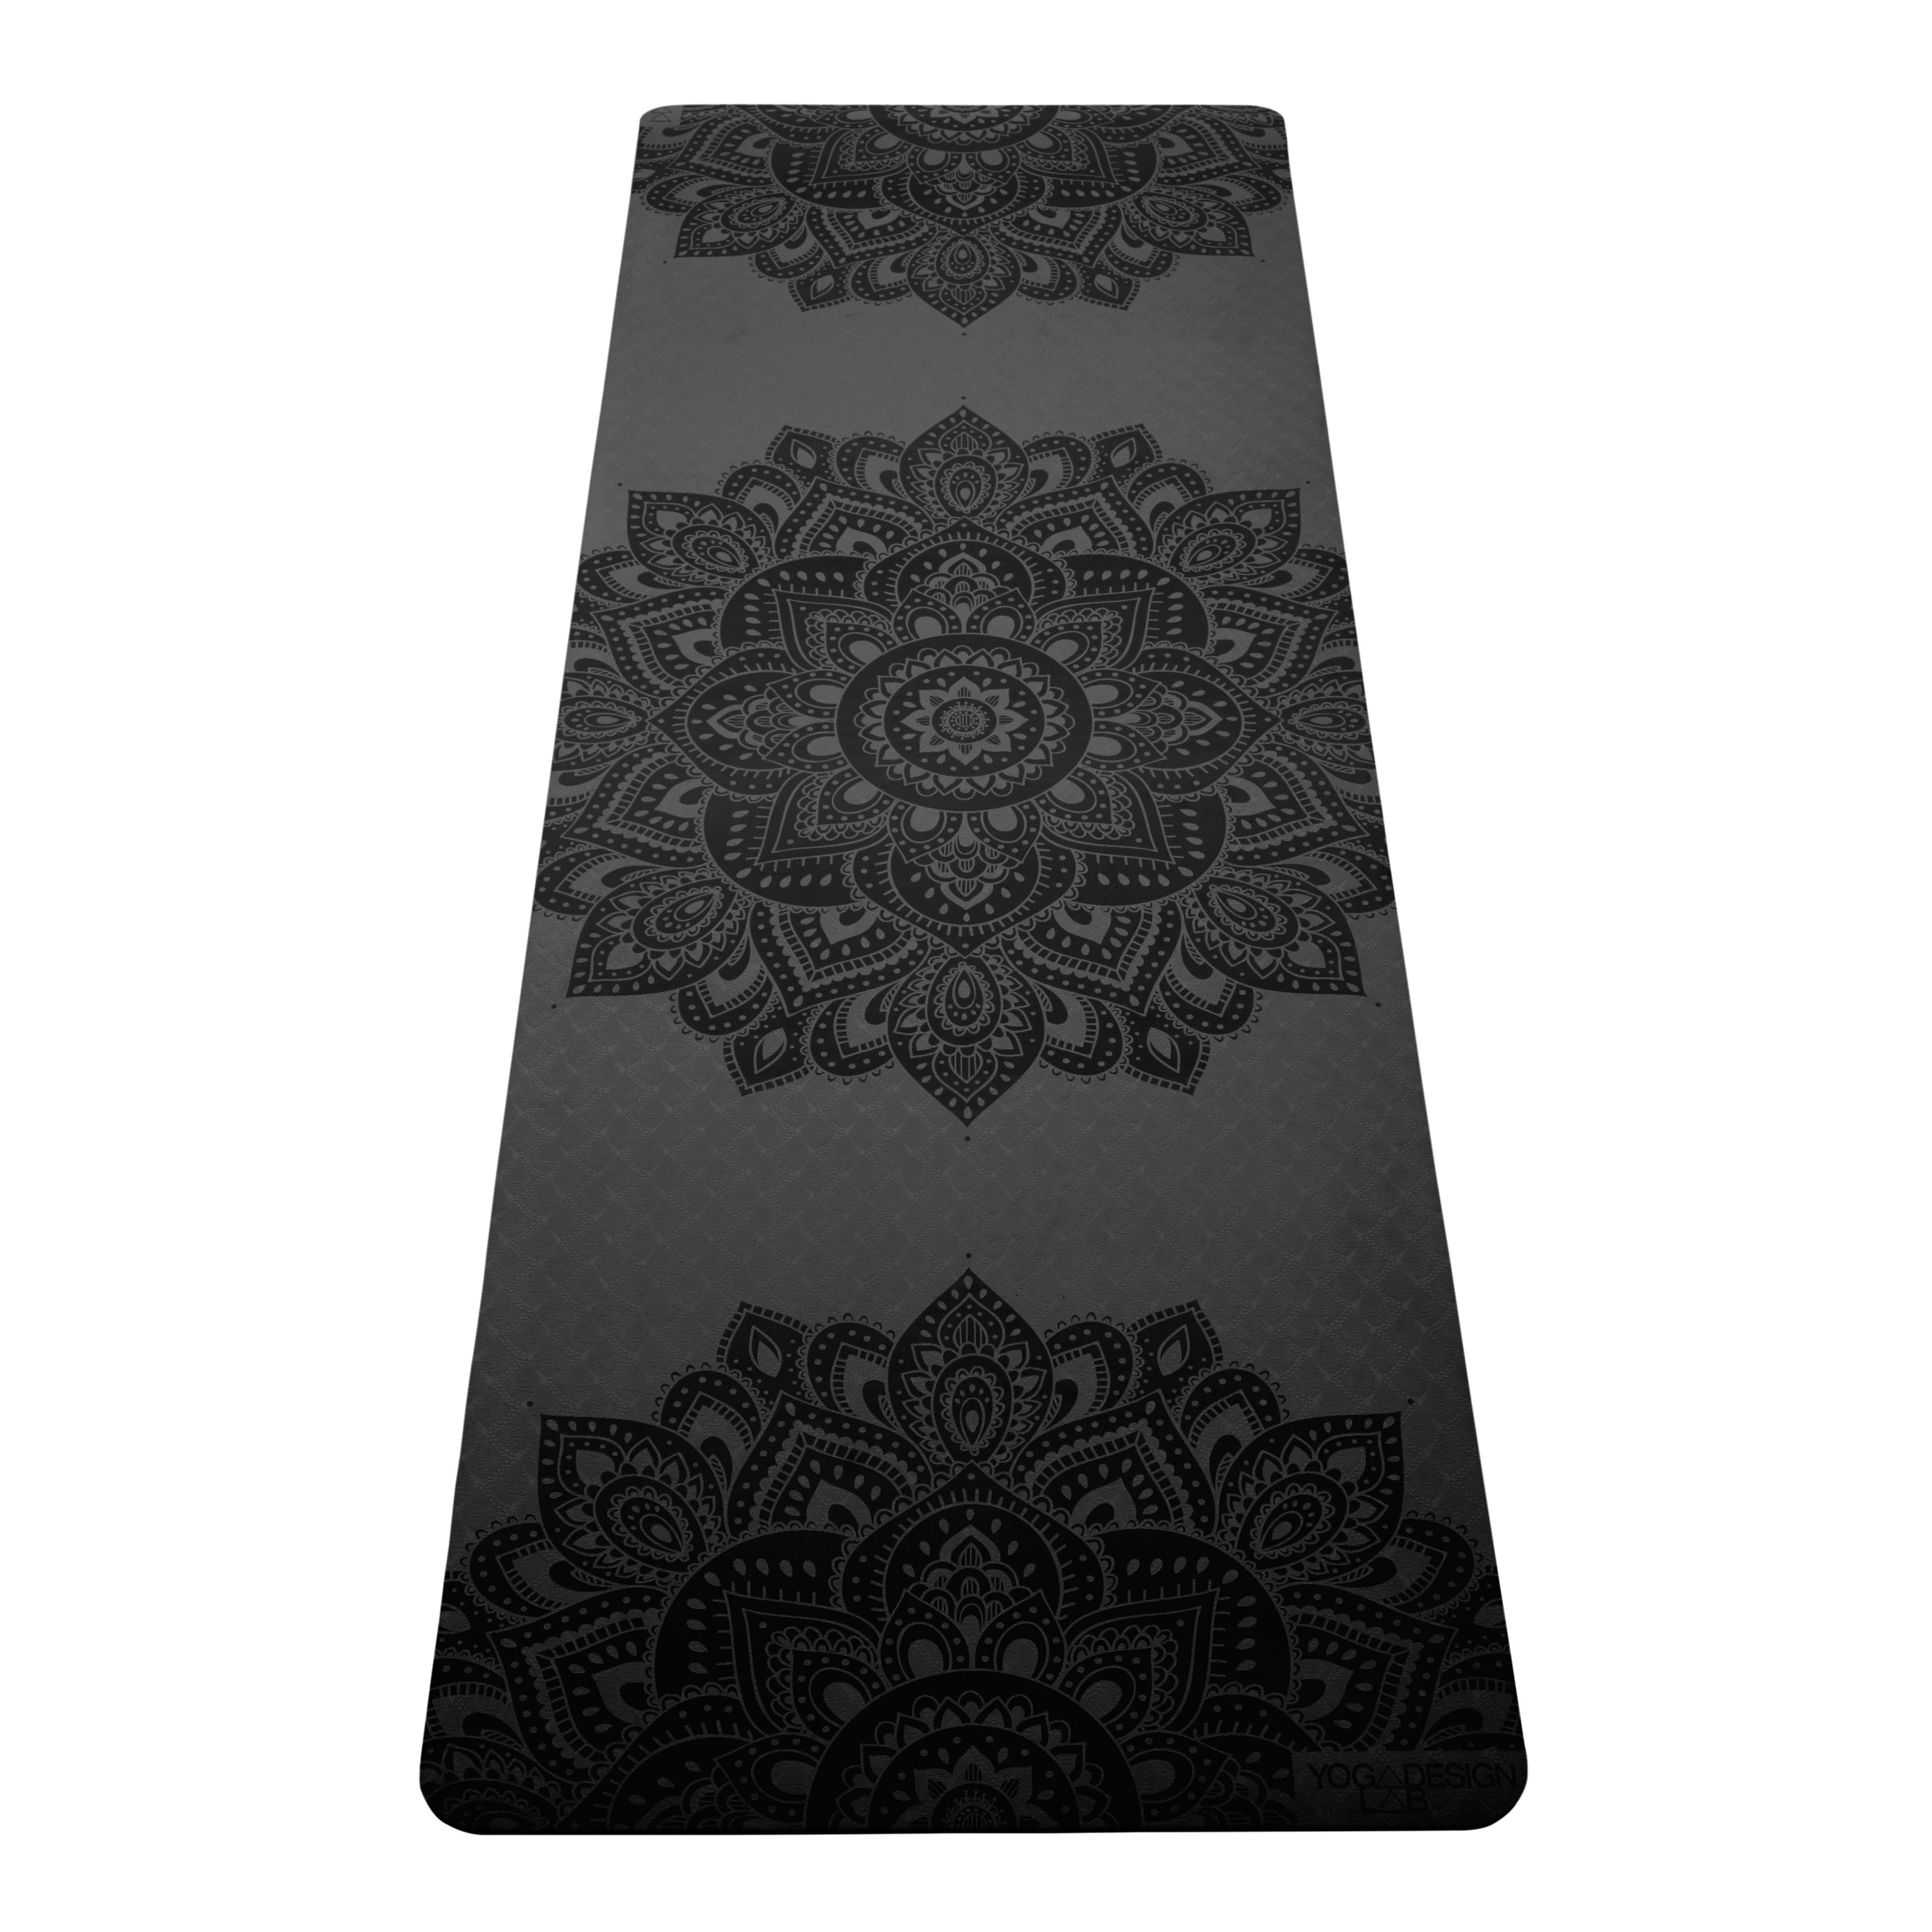 Wholesale - Yoga Studio Designed Grey Mat Mandala Yoga Mat 6mm